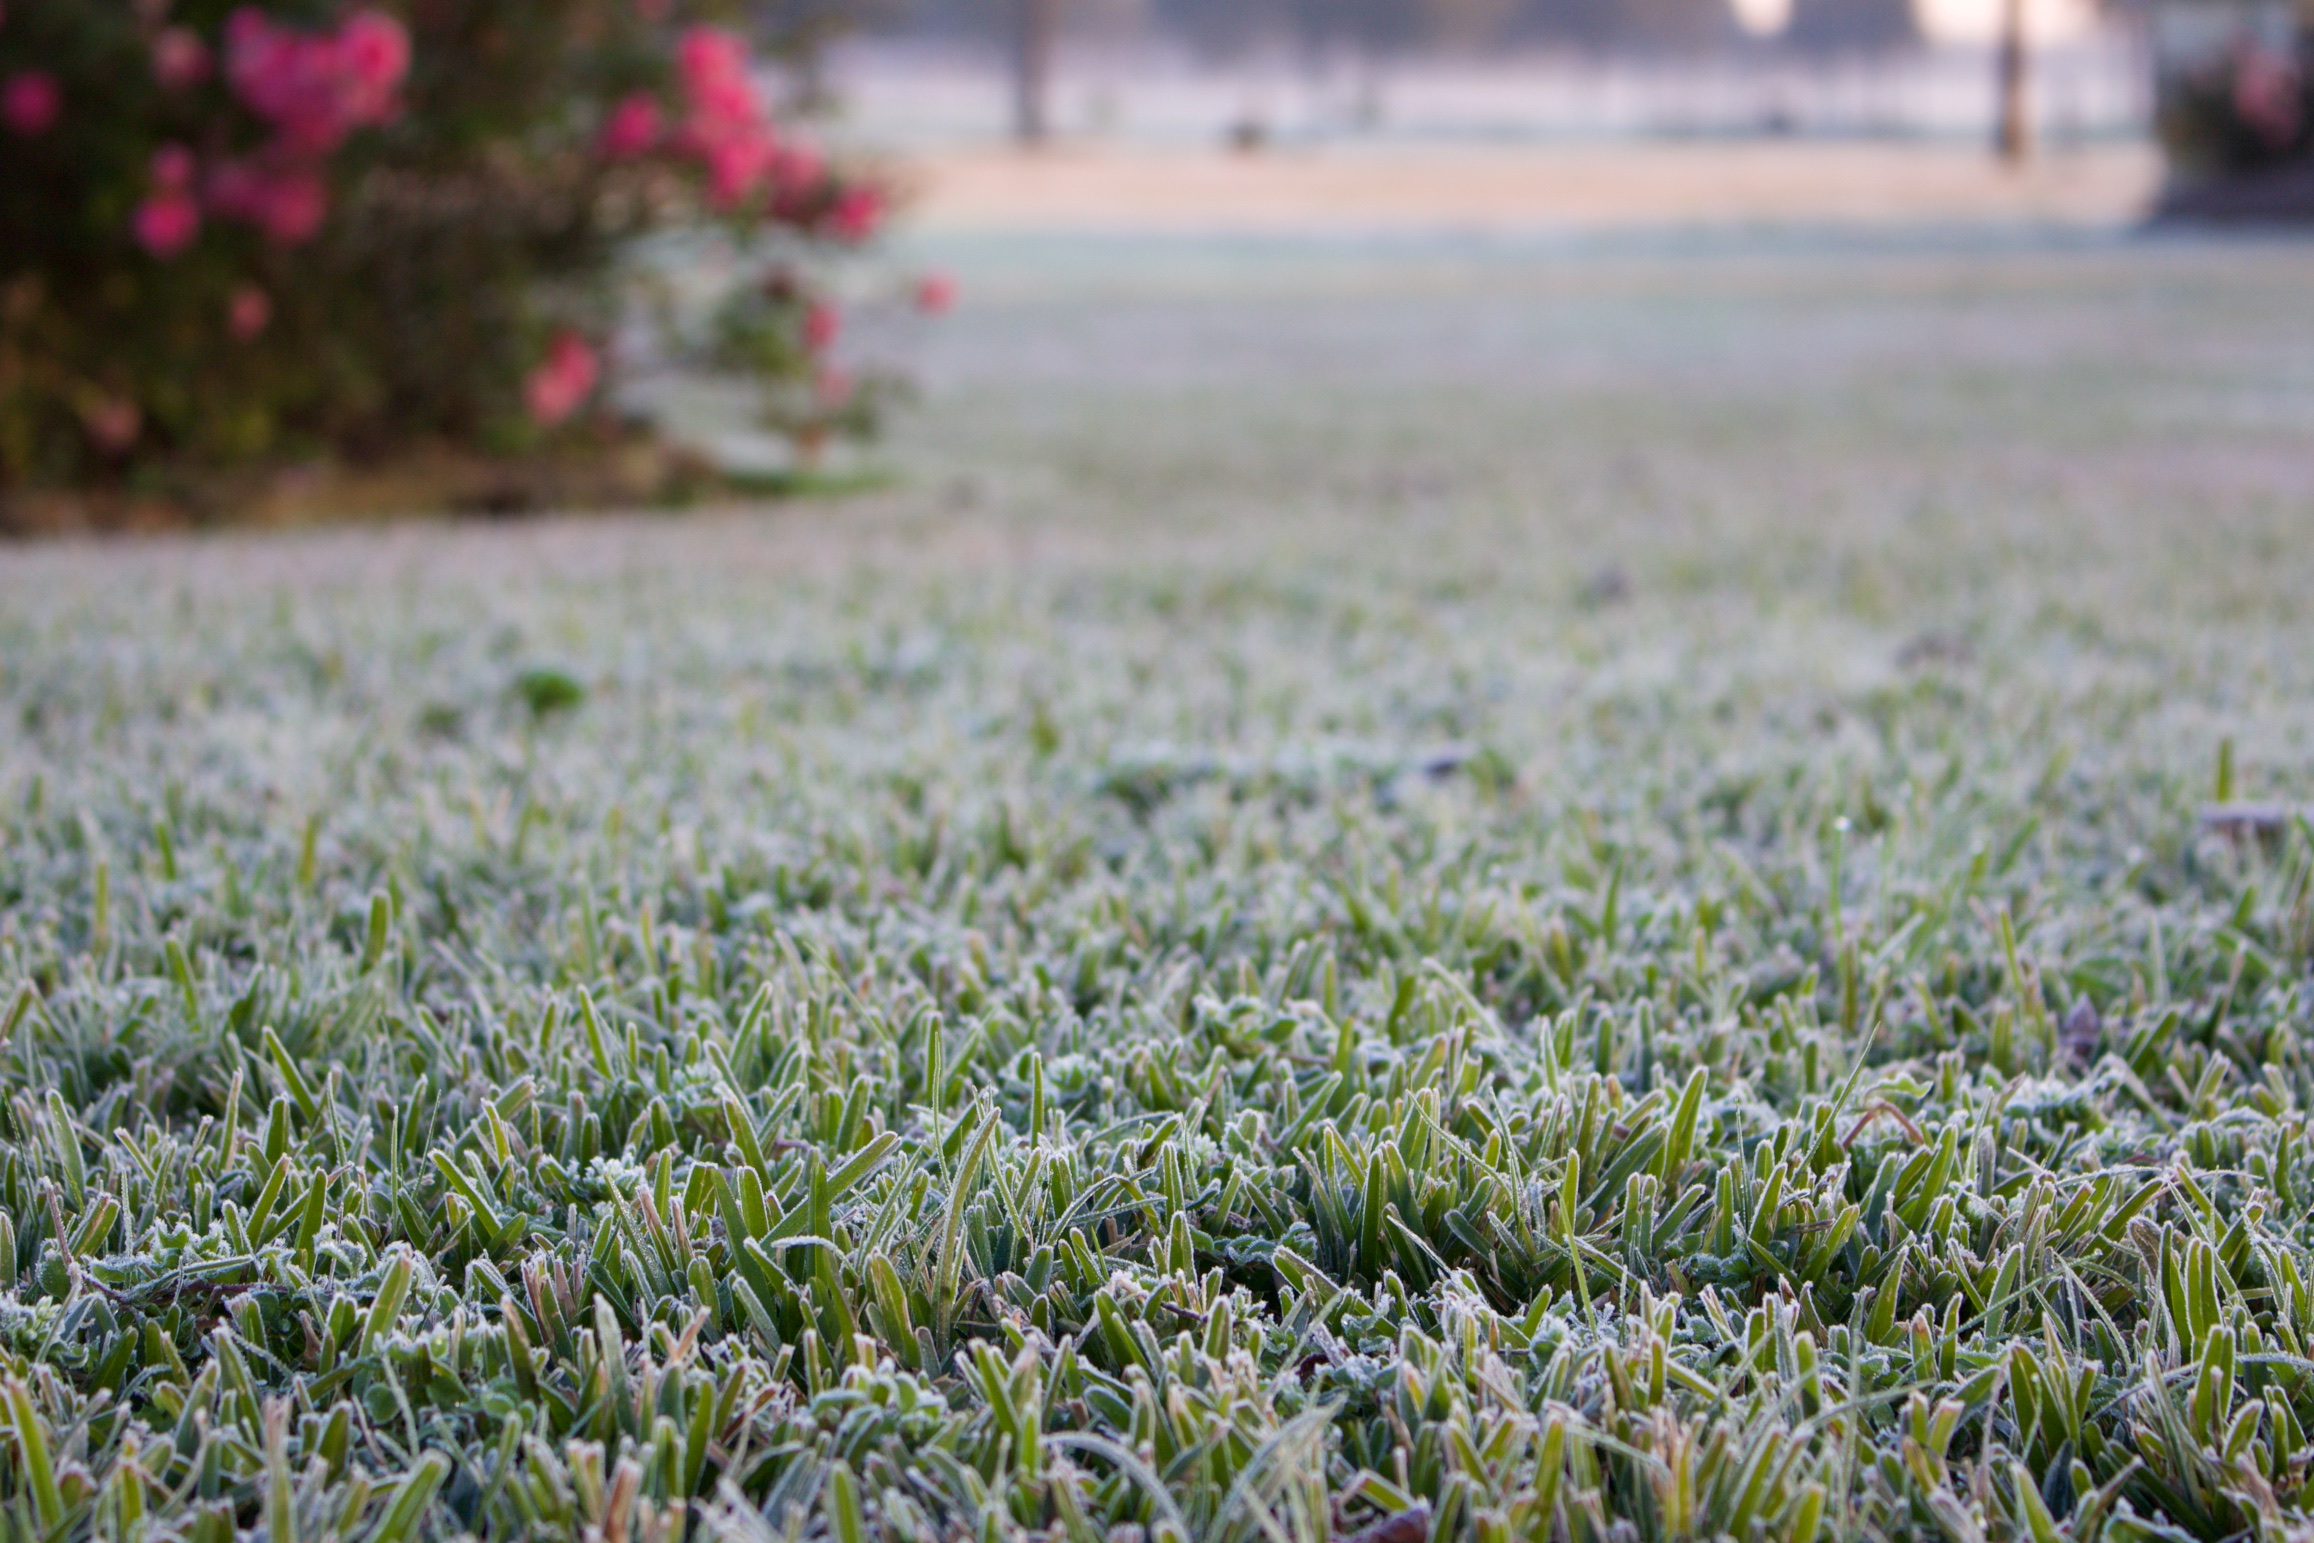 2015-01-16 Early Morning Frost 01 – Murff Turf Farm